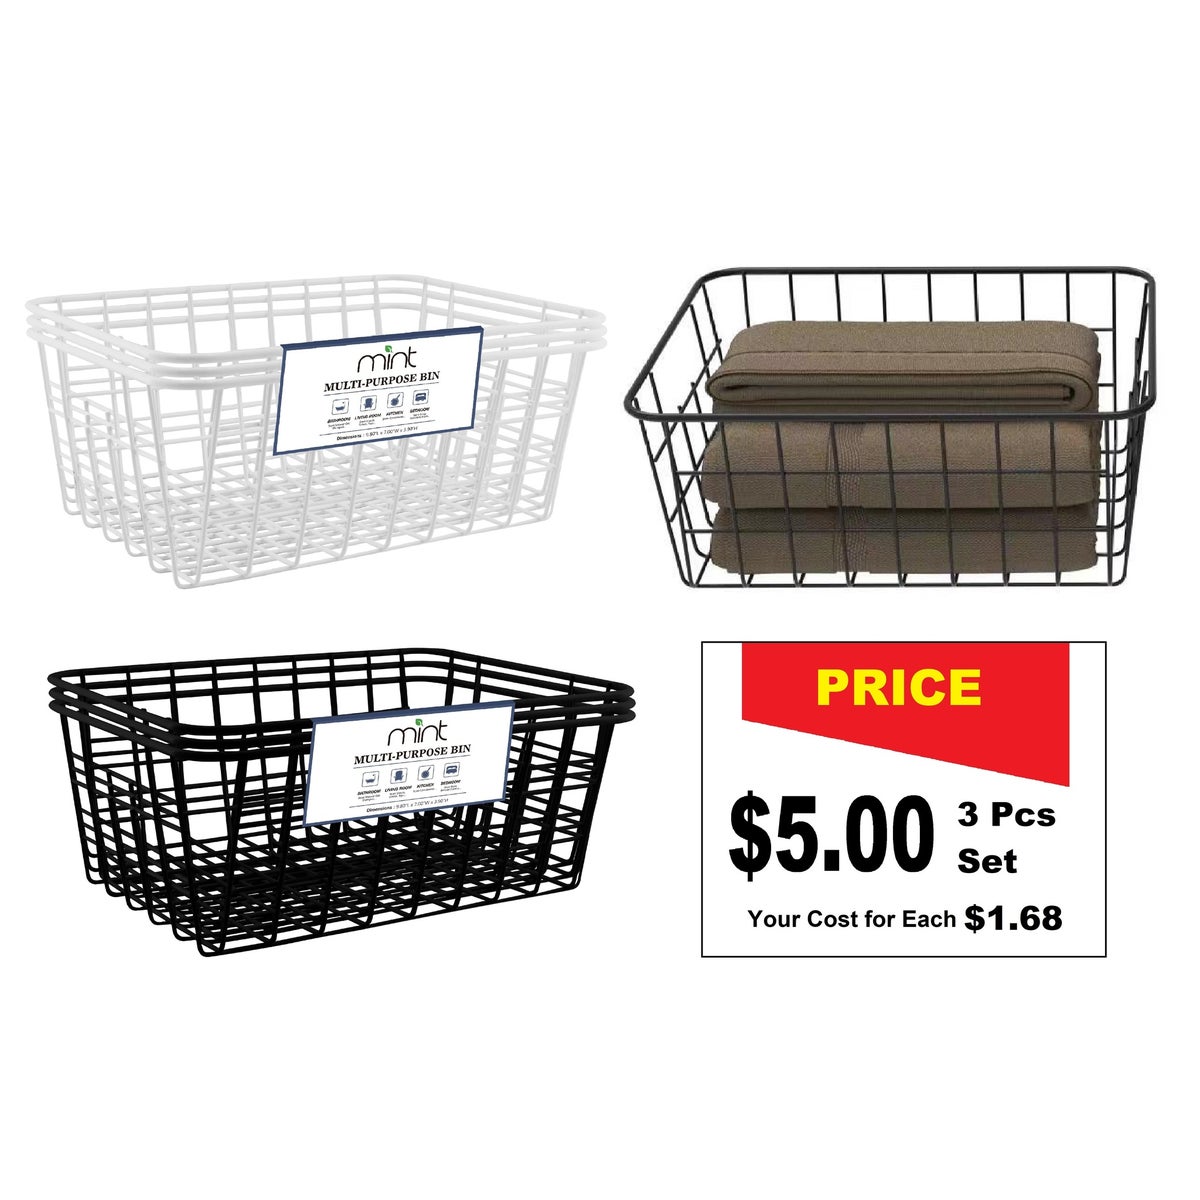 Black/White - Set of 3 Small Nesting Storage Baskets 9.8"x7"x3.9" (6sets)